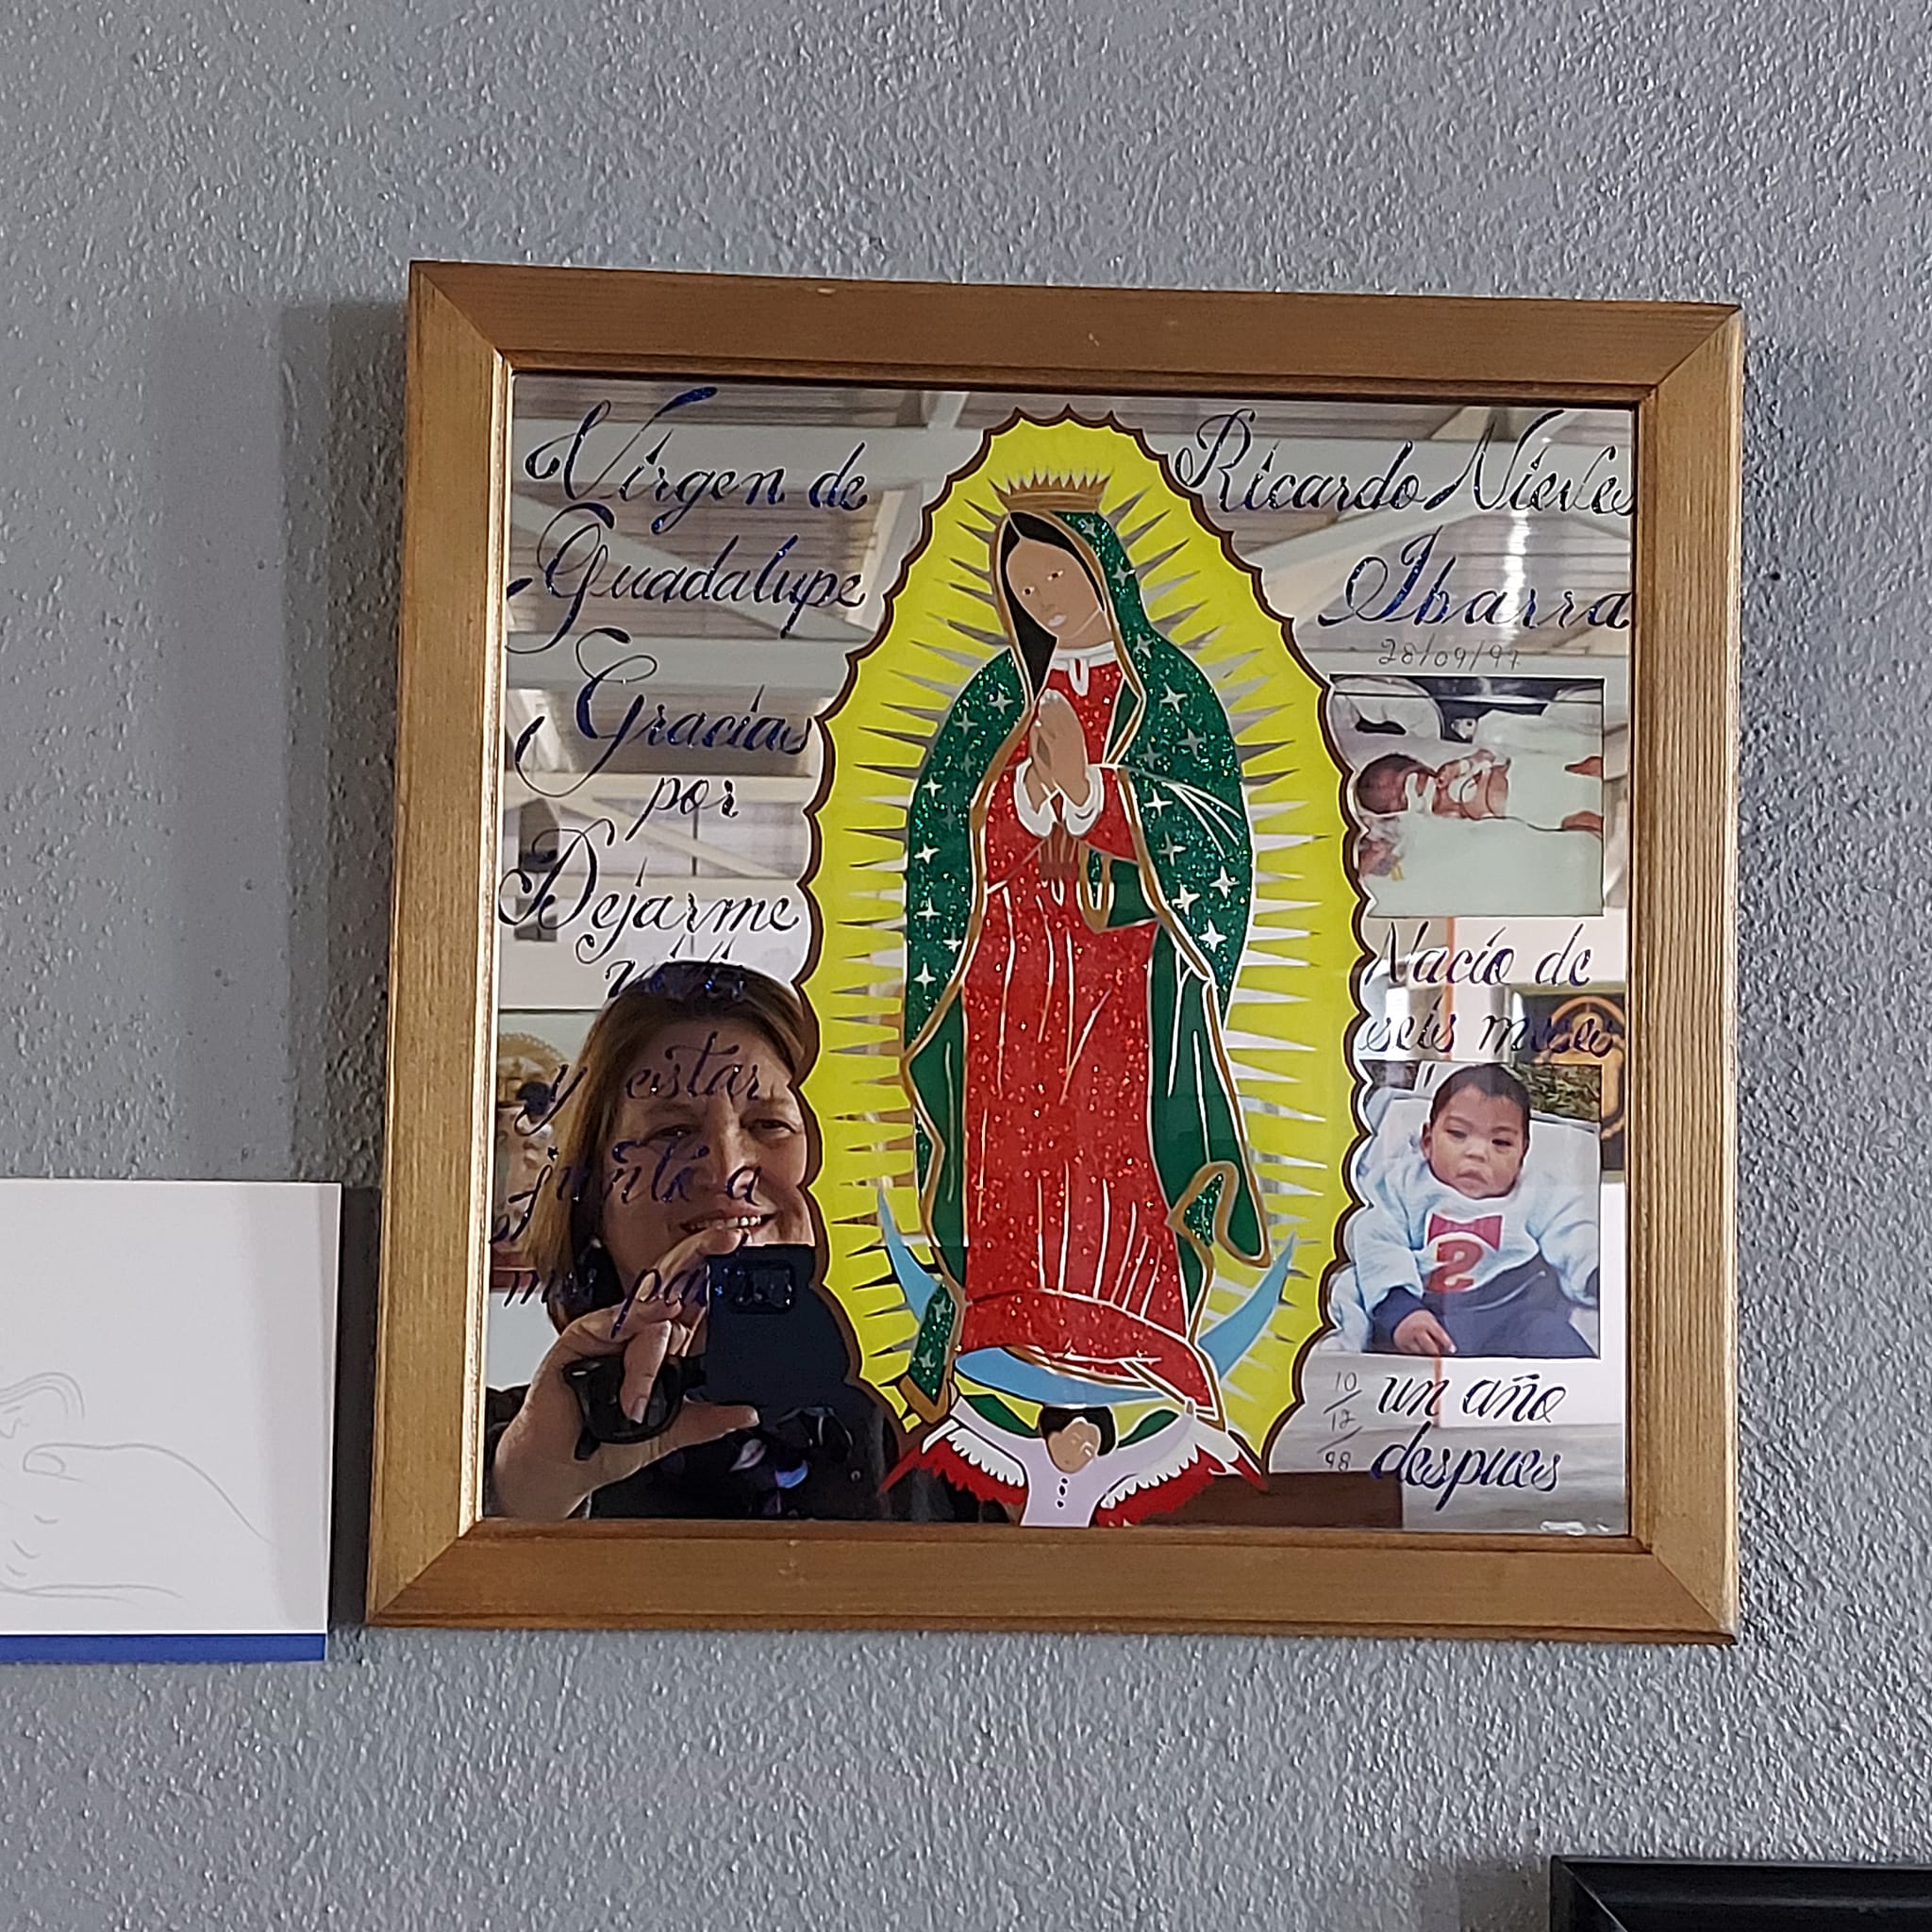 97 - Virgen de Guadalupe